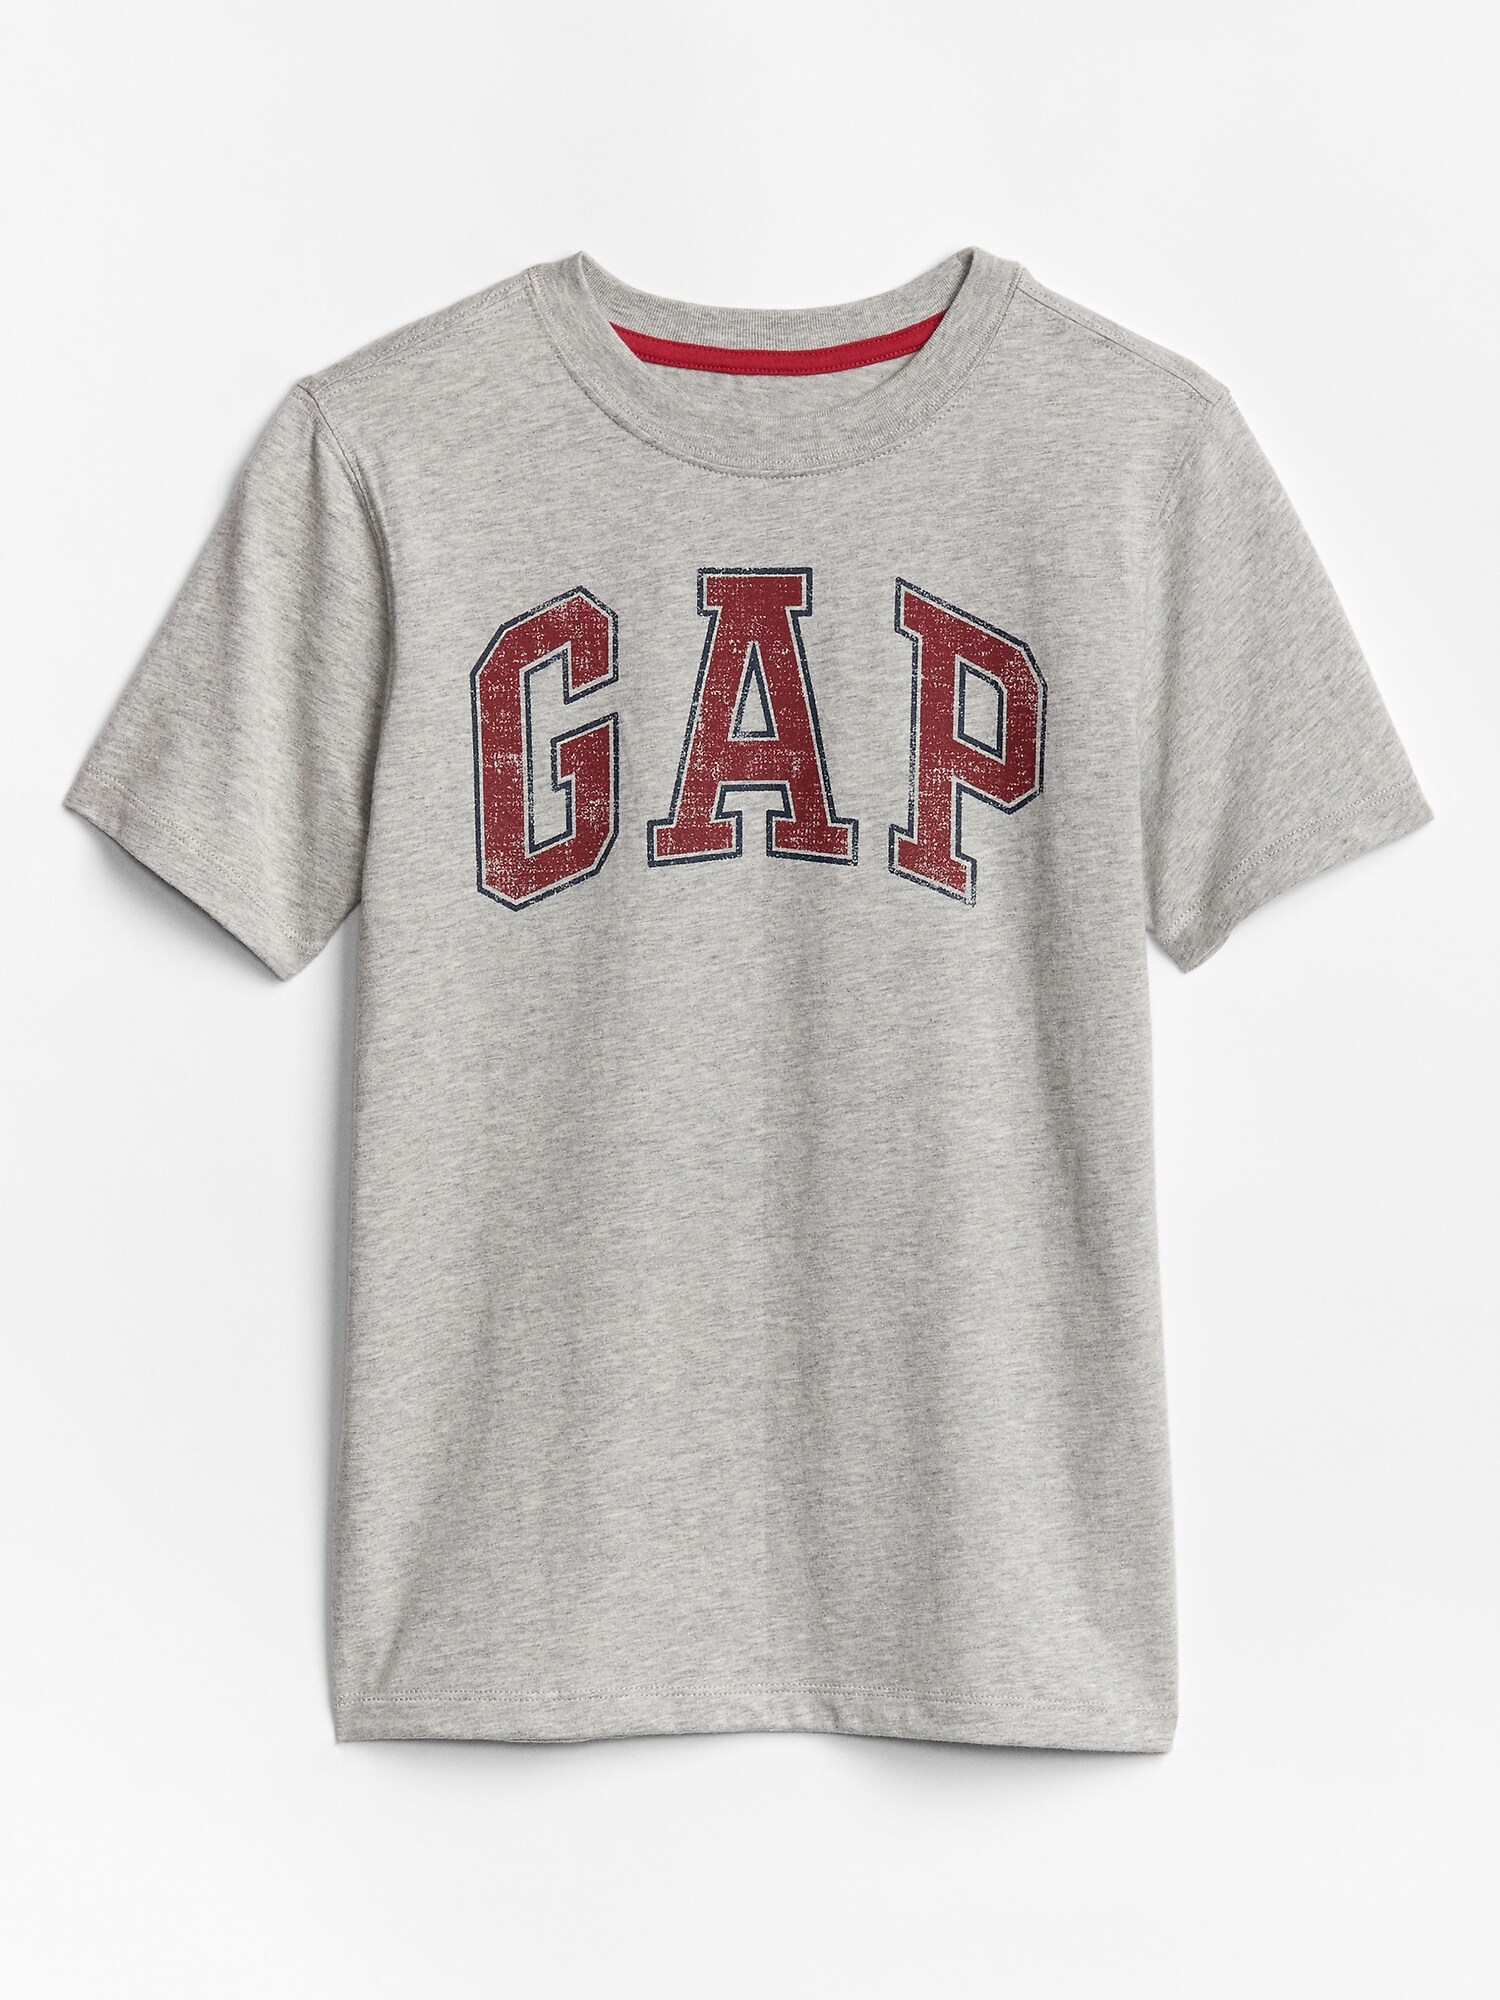 Kids Gap Logo Short Sleeve T-Shirt | Gap Factory